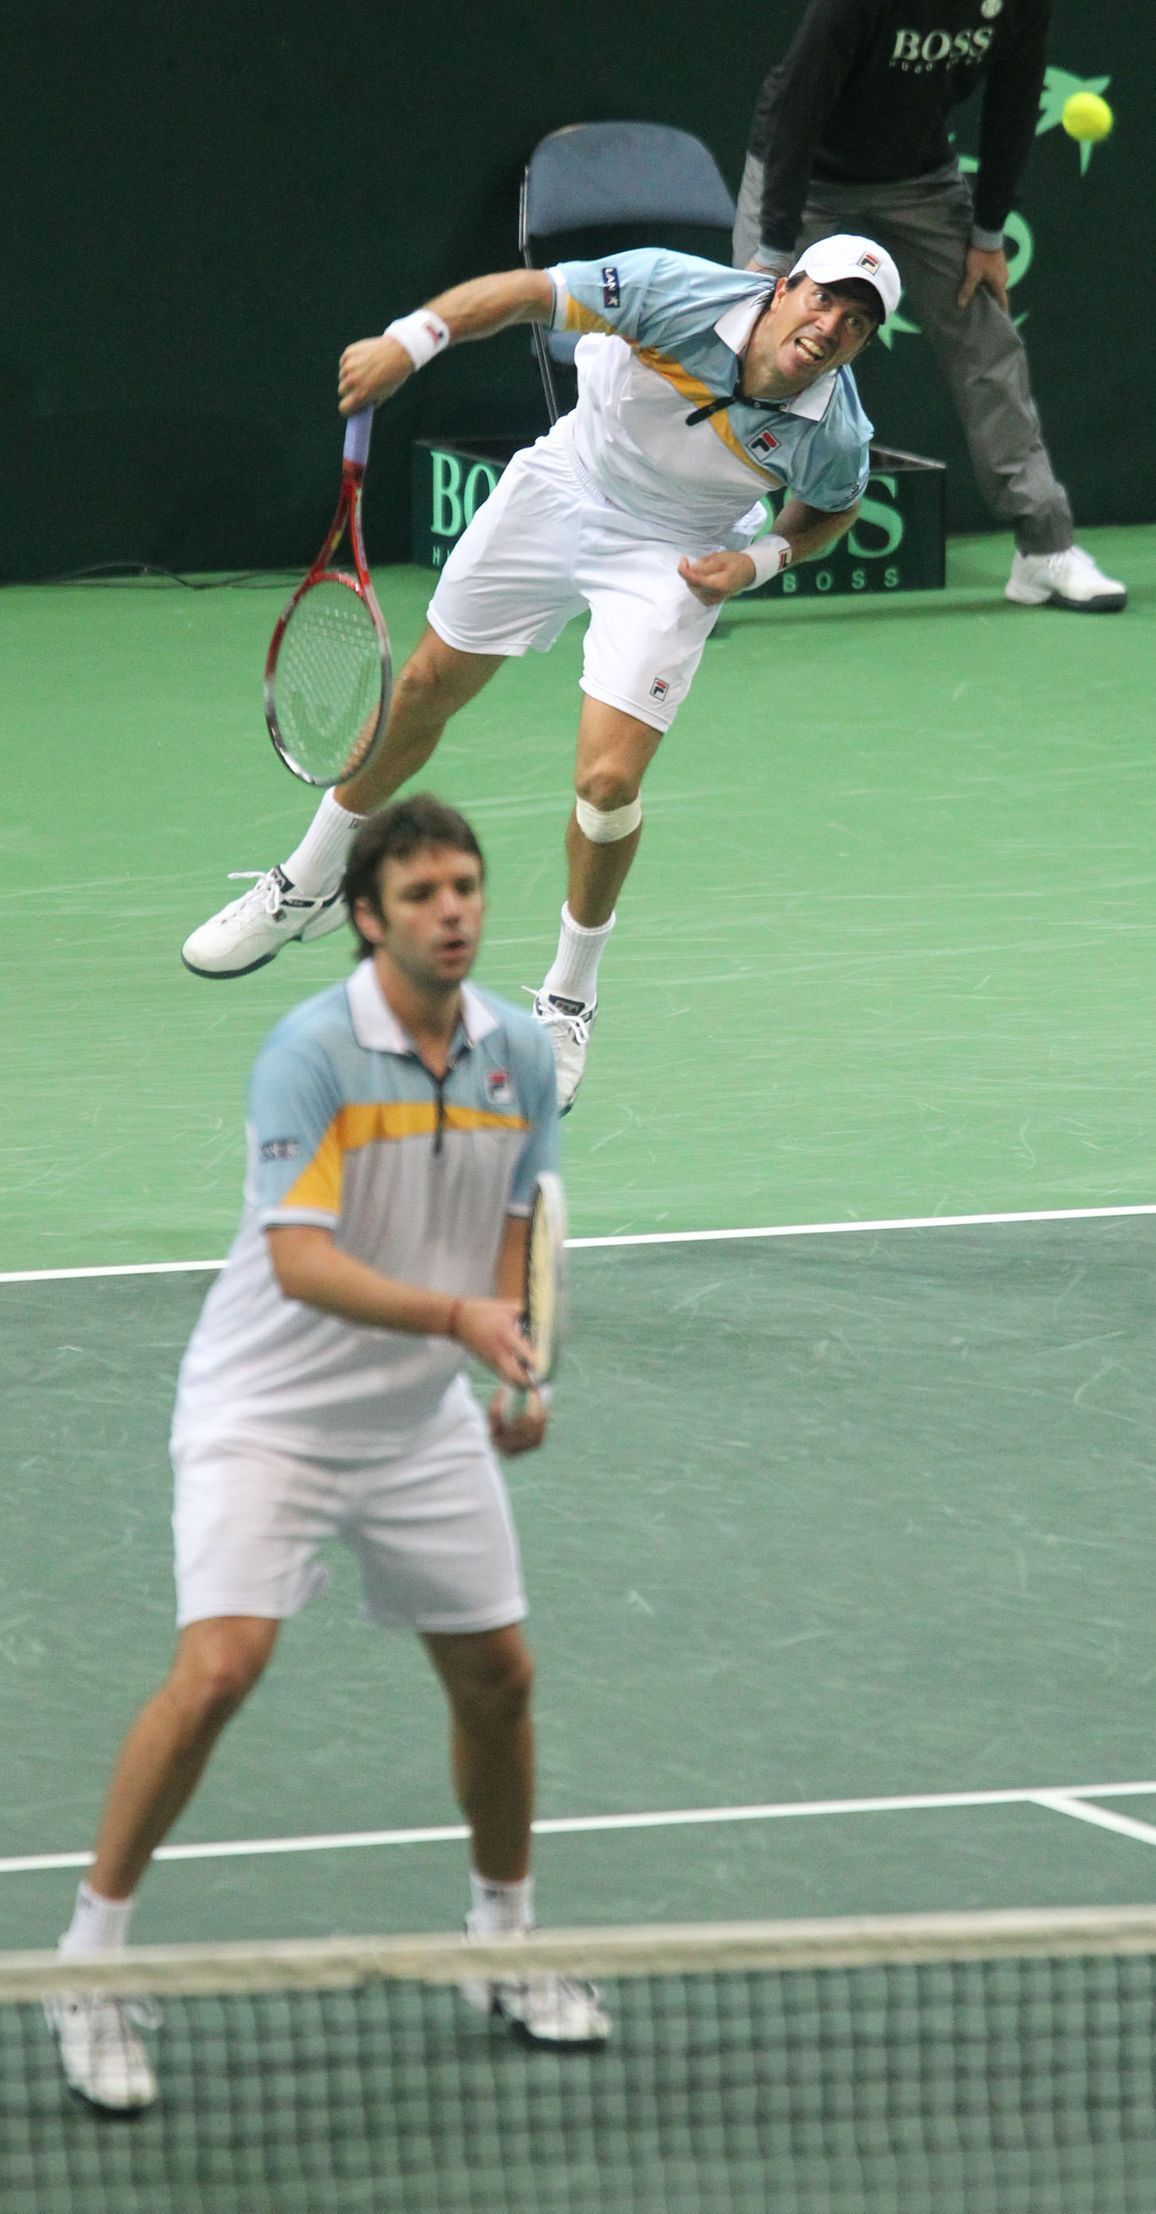 Tenis, DC, Česko - Argentina: čtyřhra -  Carlos Berlocq (vpravo) a Horacio Zeballos